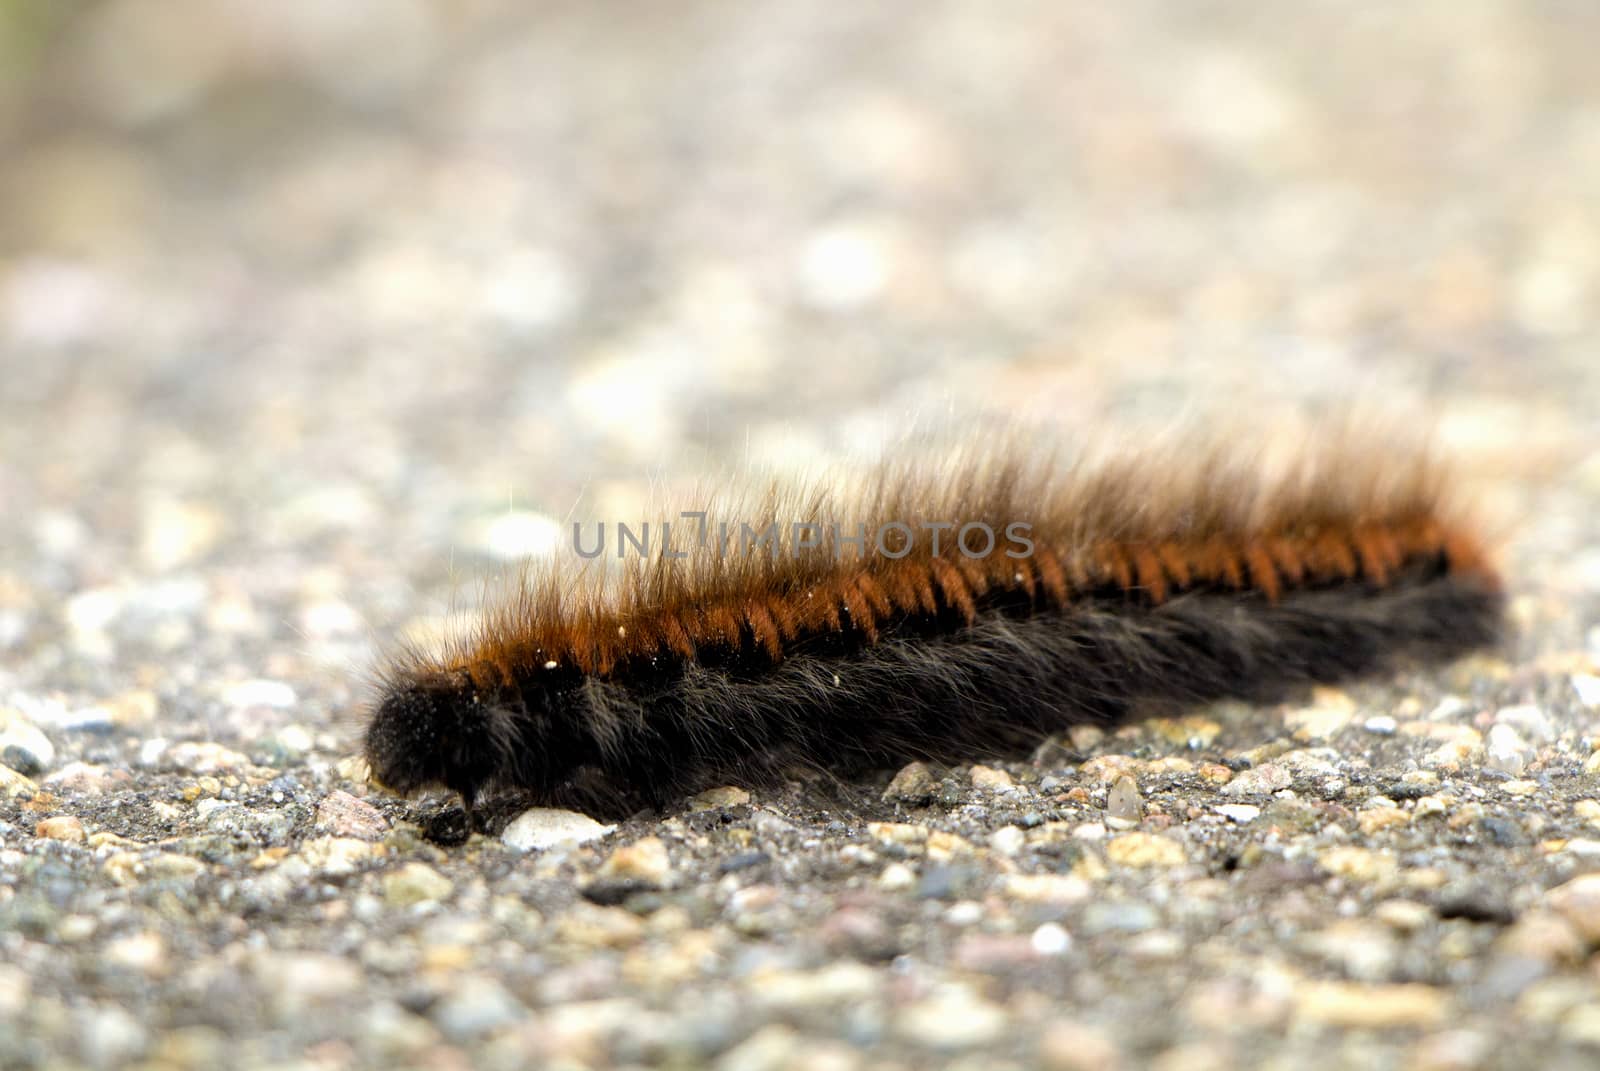 Black and orange hairy larvae moving on asphalt in autumn.